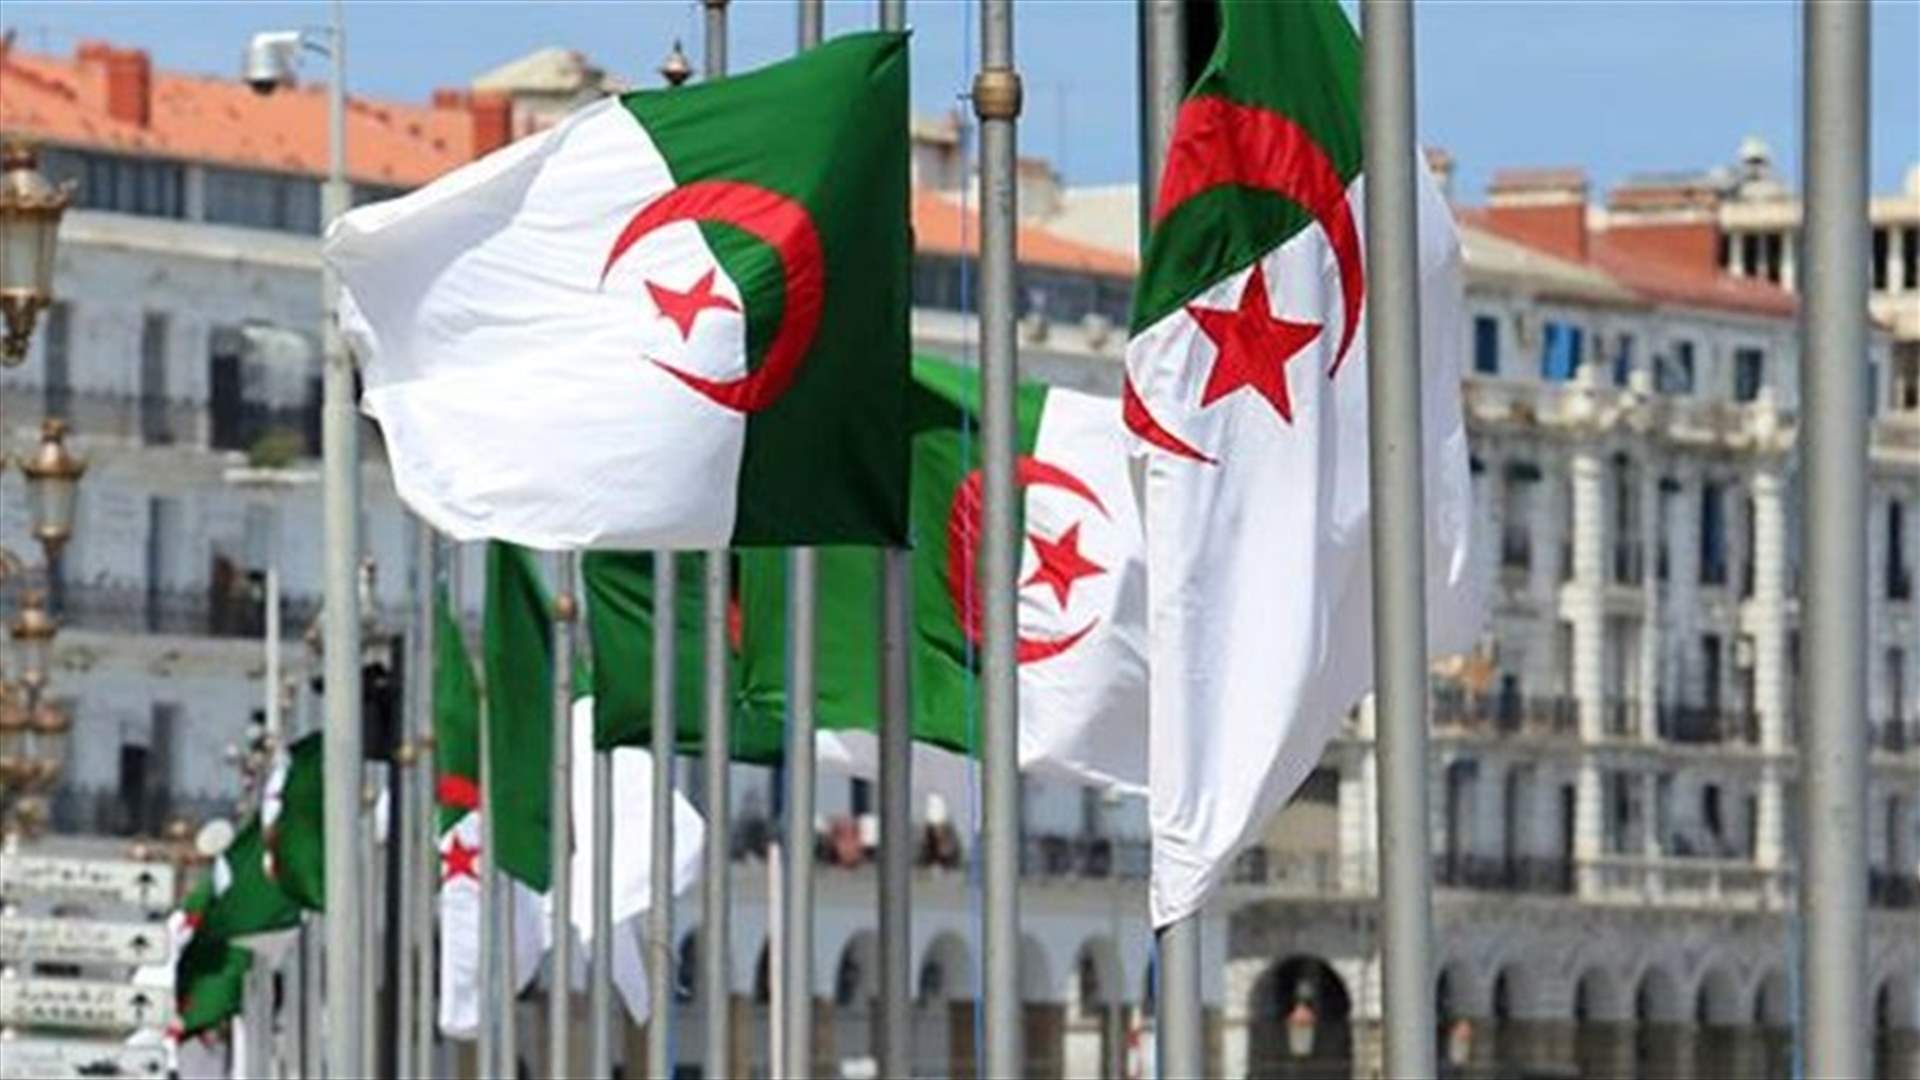 Five Algerian billionaires arrested as part of antigraft investigation - State TV